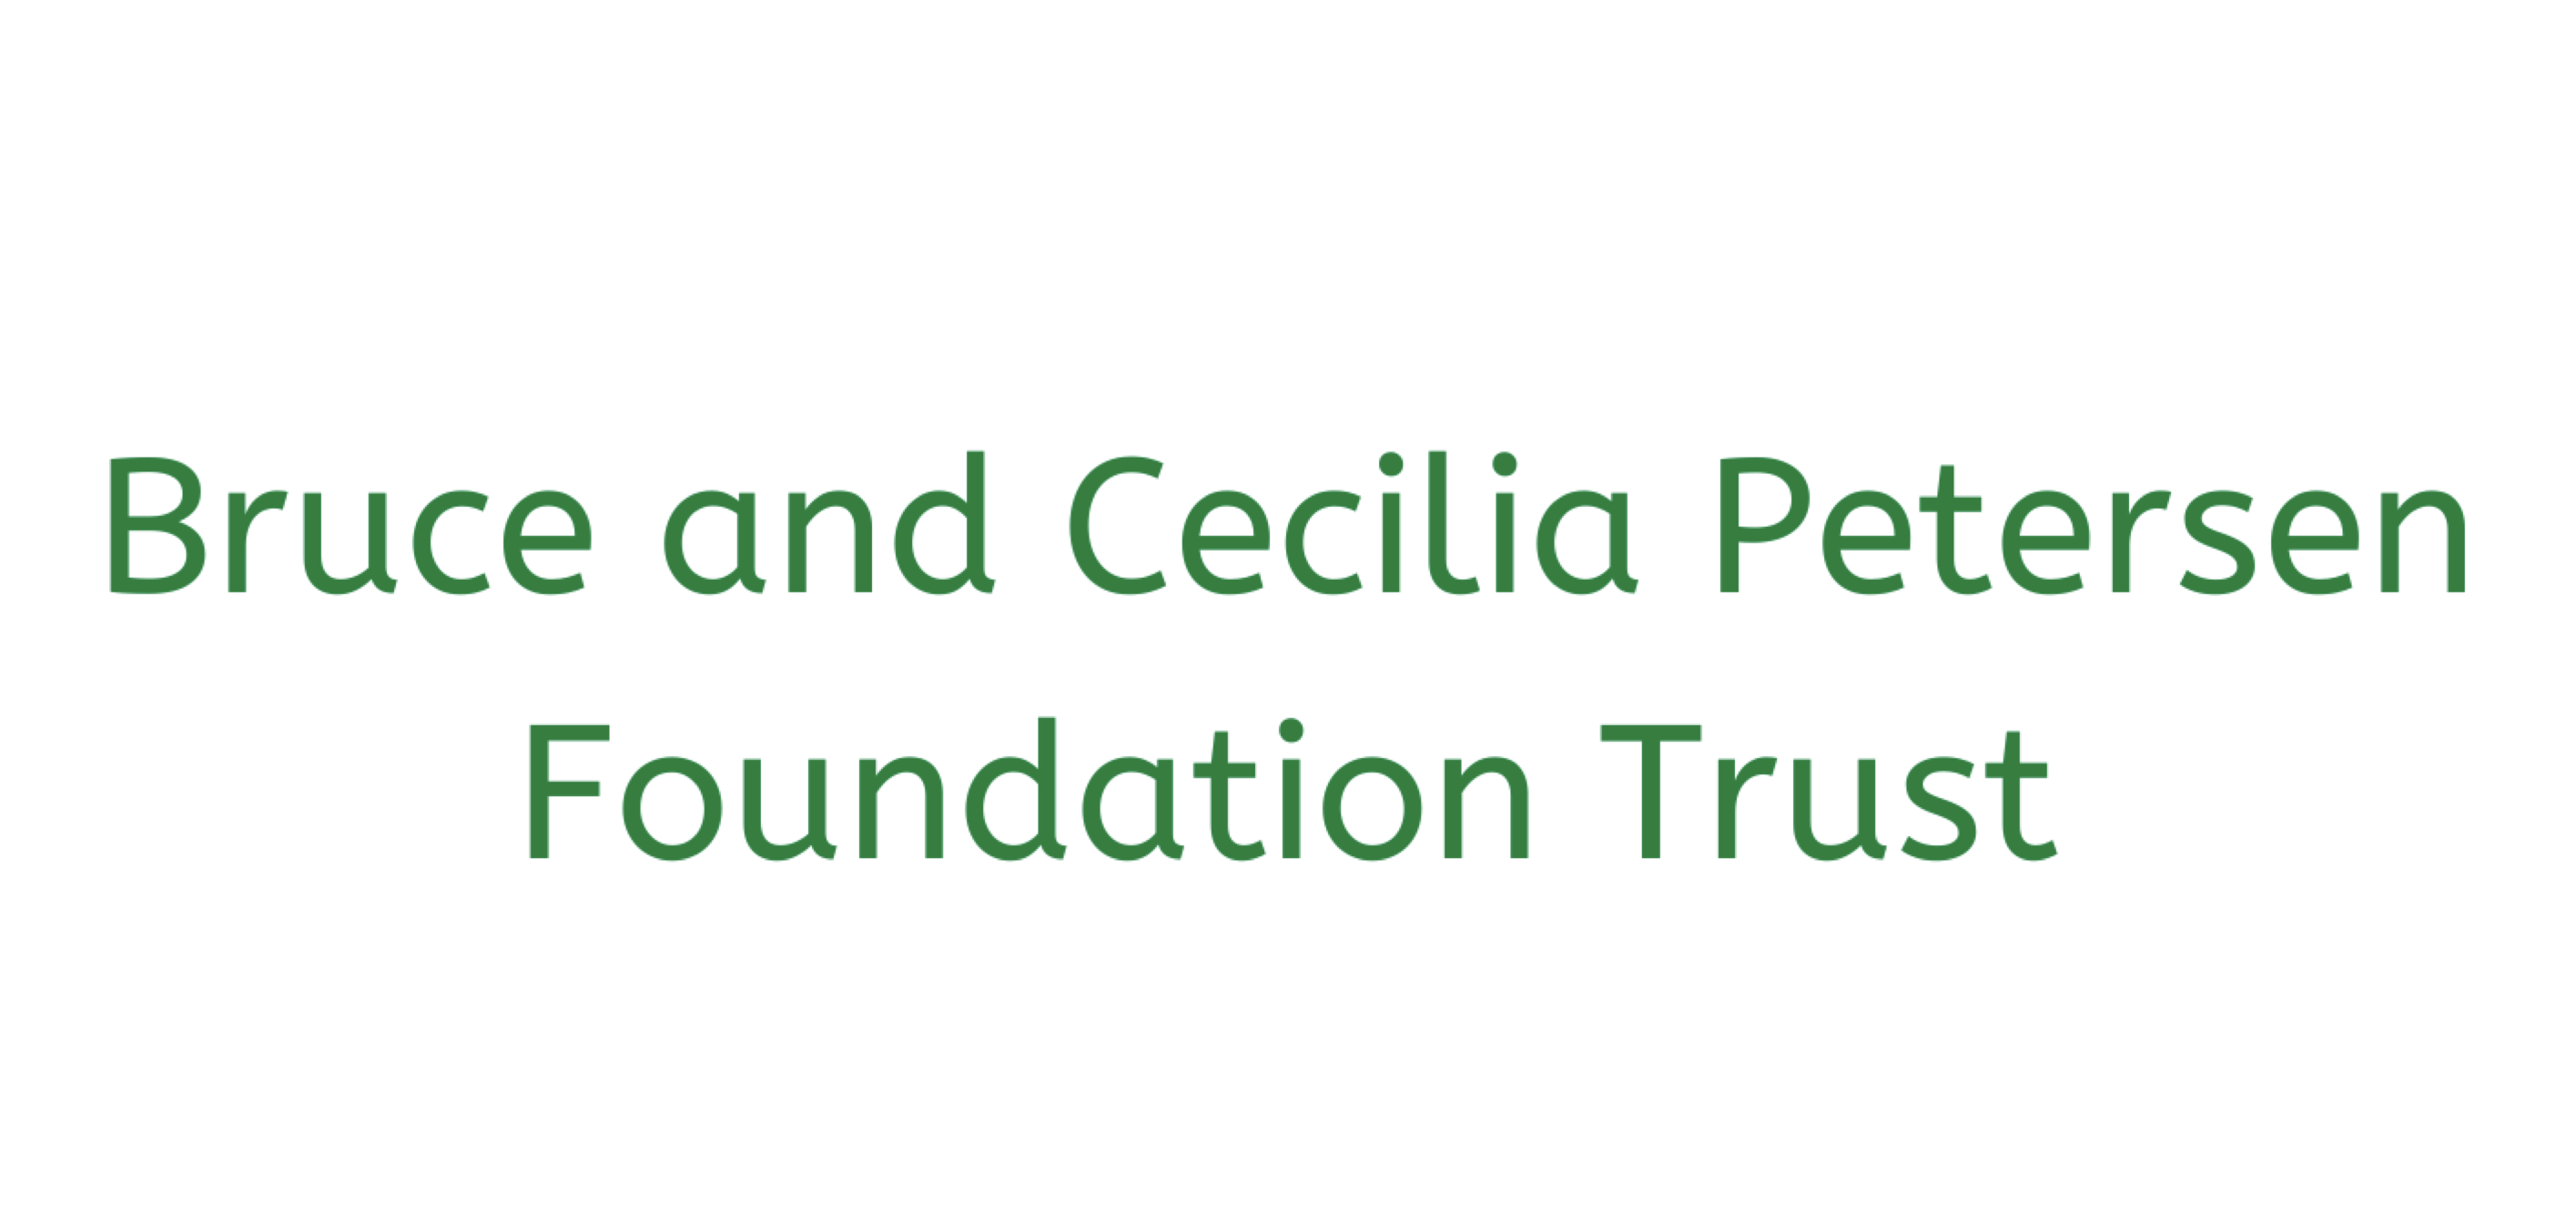 Bruce and Cecilia Petersen Foundation Trust